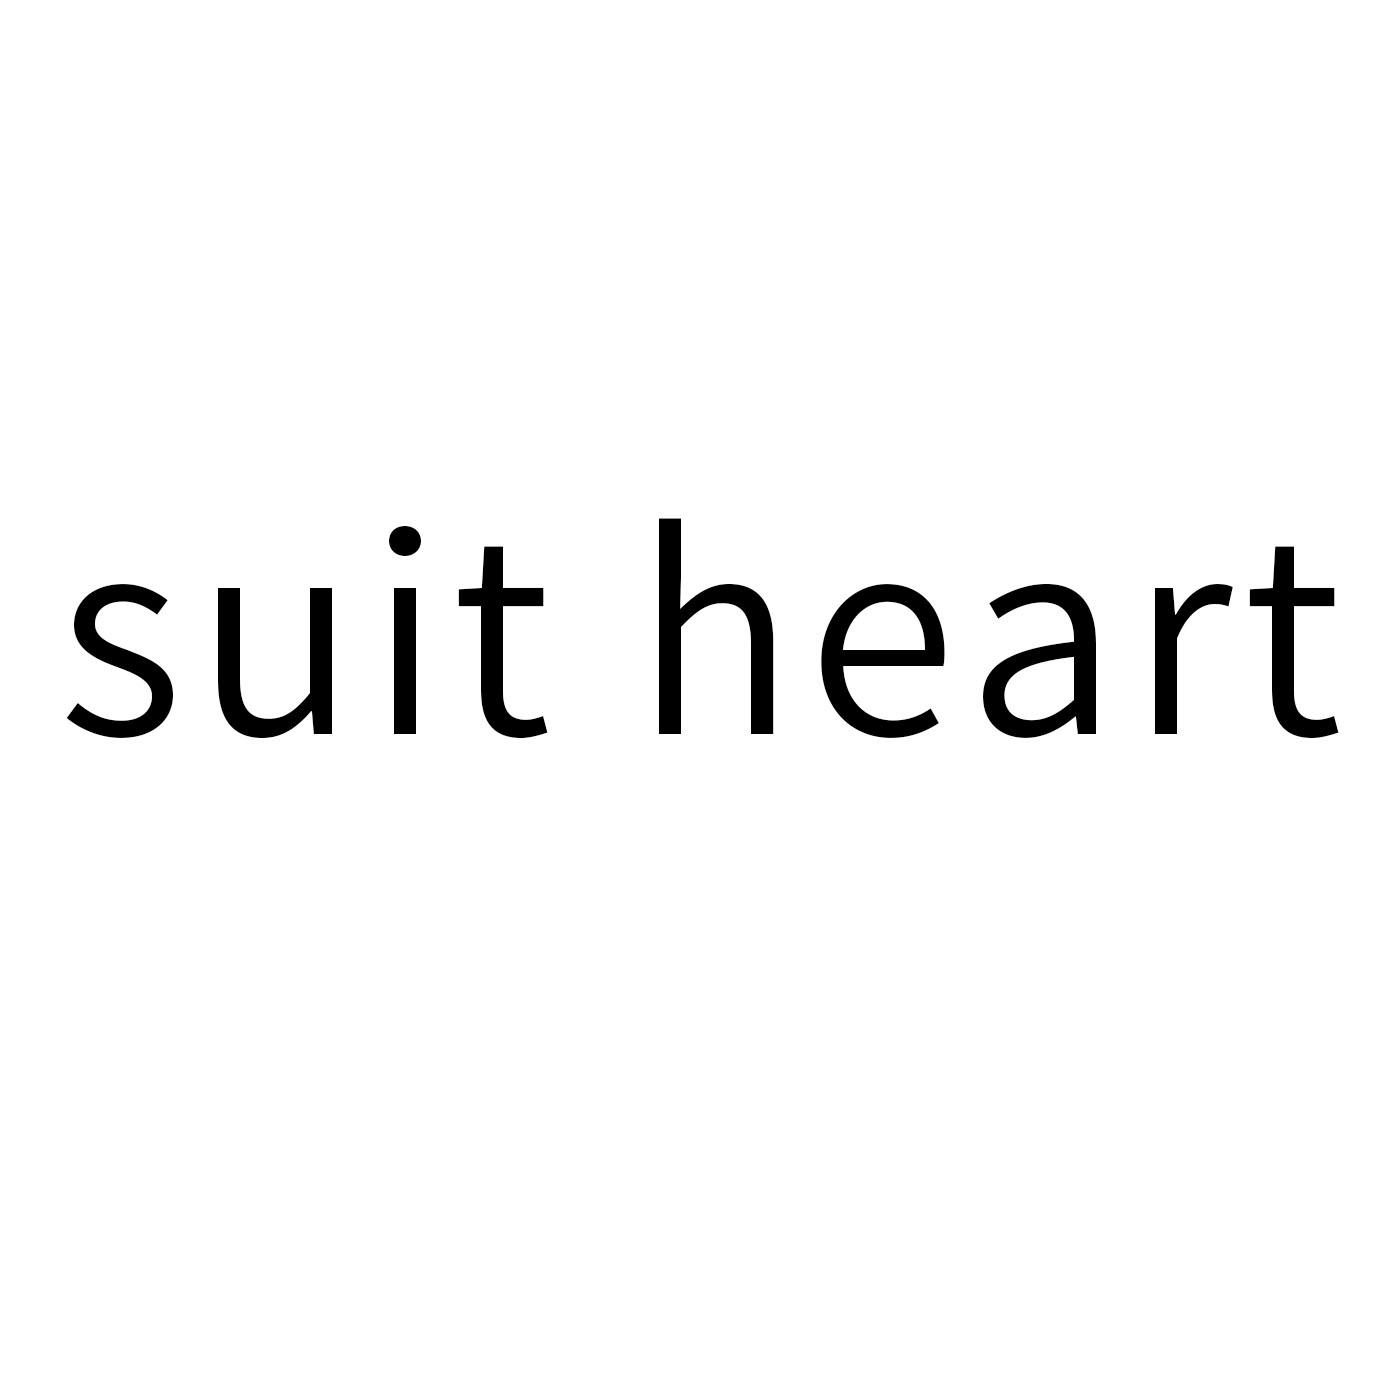 21类-厨具瓷器SUIT HEART商标转让